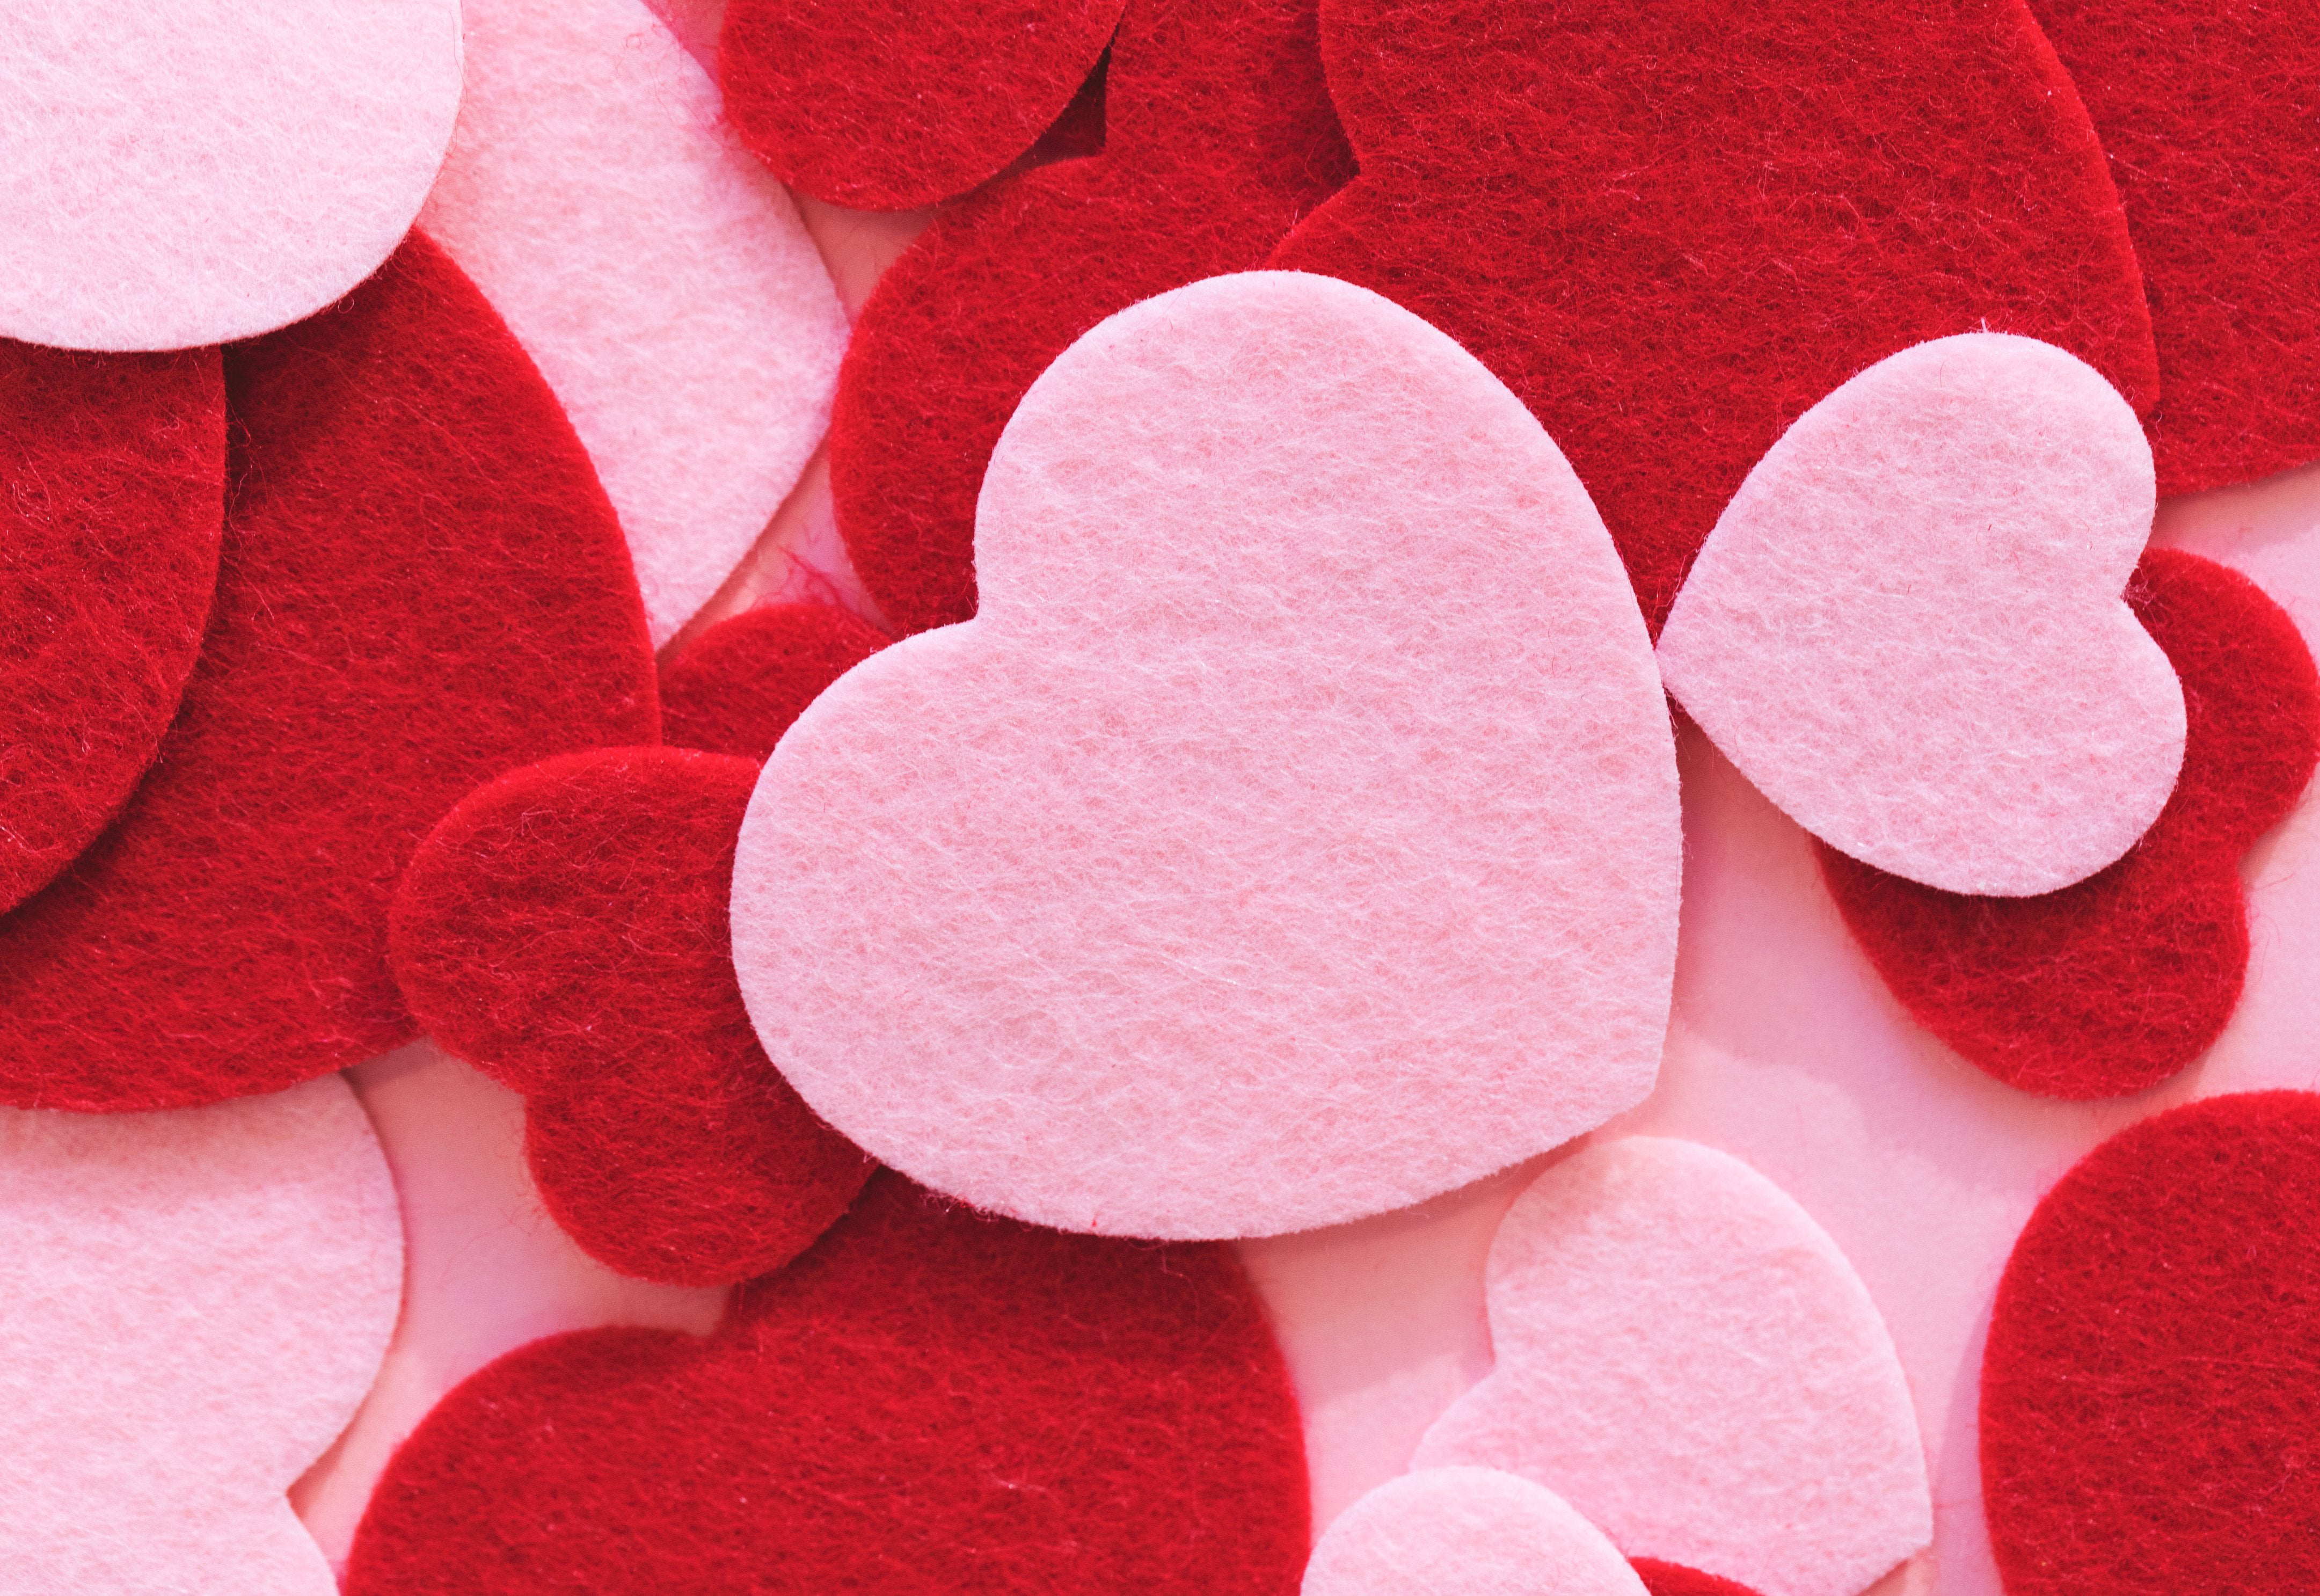 LavishlyHip's Valentine's Day 2021 Gift Guide